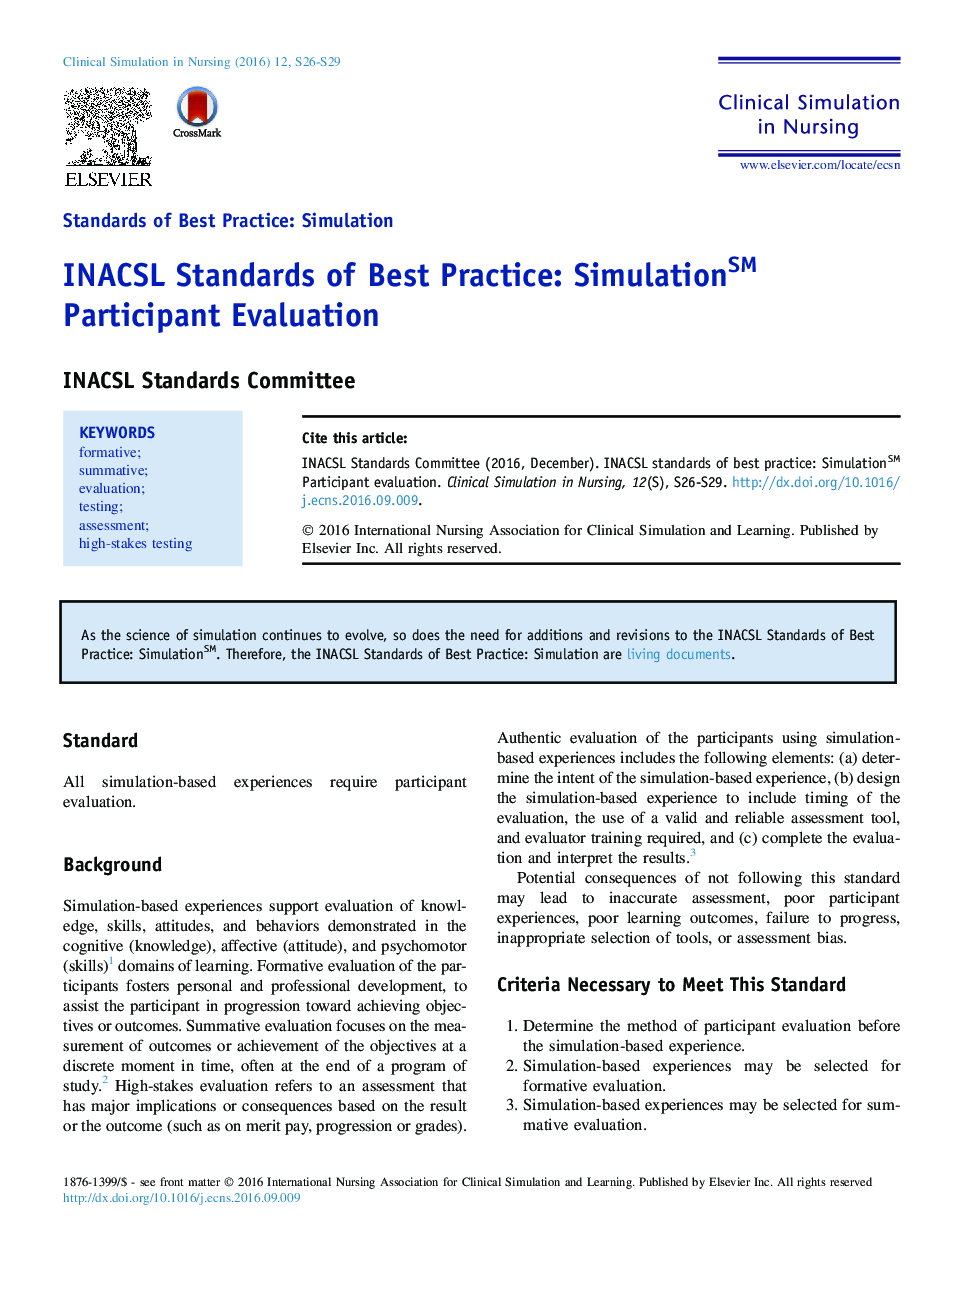 INACSL Standards of Best Practice: SimulationSM Participant Evaluation